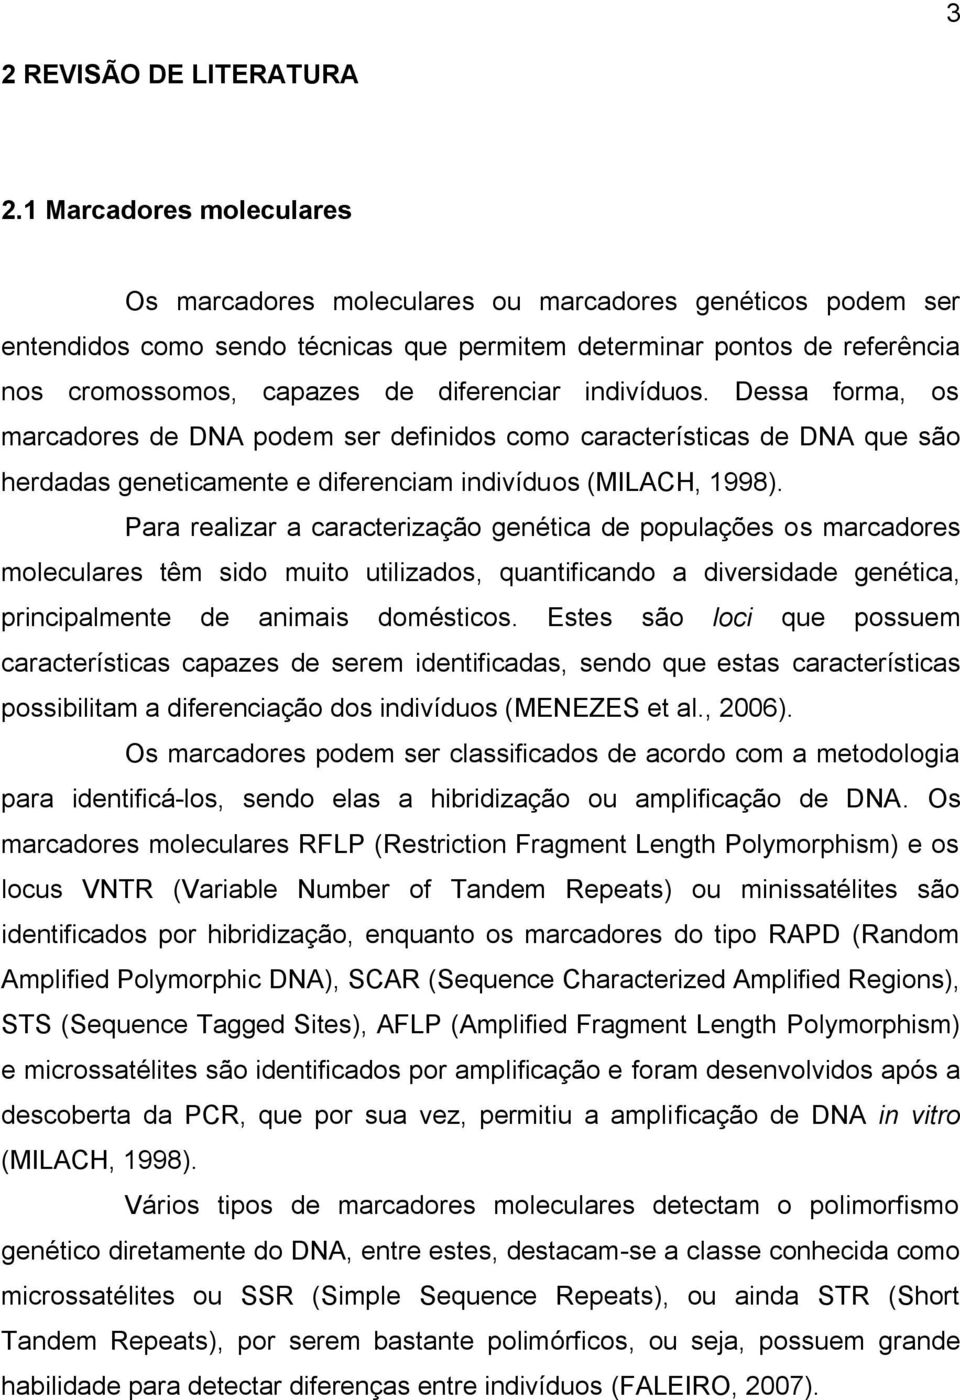 diferenciar indivíduos. Dessa forma, os marcadores de DNA podem ser definidos como características de DNA que são herdadas geneticamente e diferenciam indivíduos (MILACH, 1998).